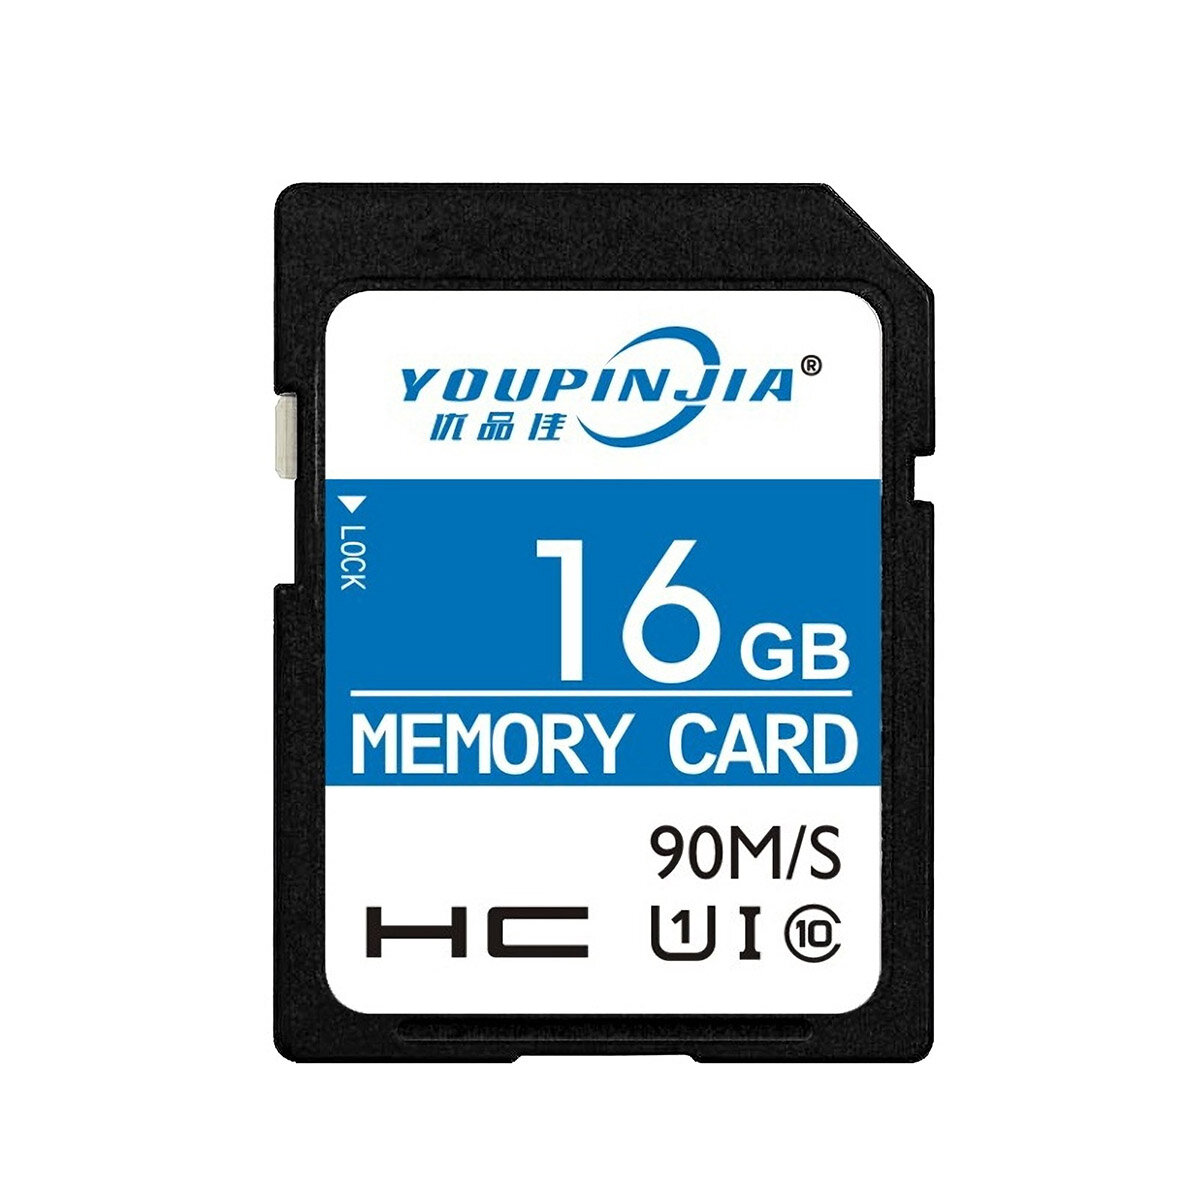 Youpinjia M100 Mini 256G Memory TF SD Card Flash Card 16G 32G 64G 128G High Speed Smart Card for Micro Single Digital Ca